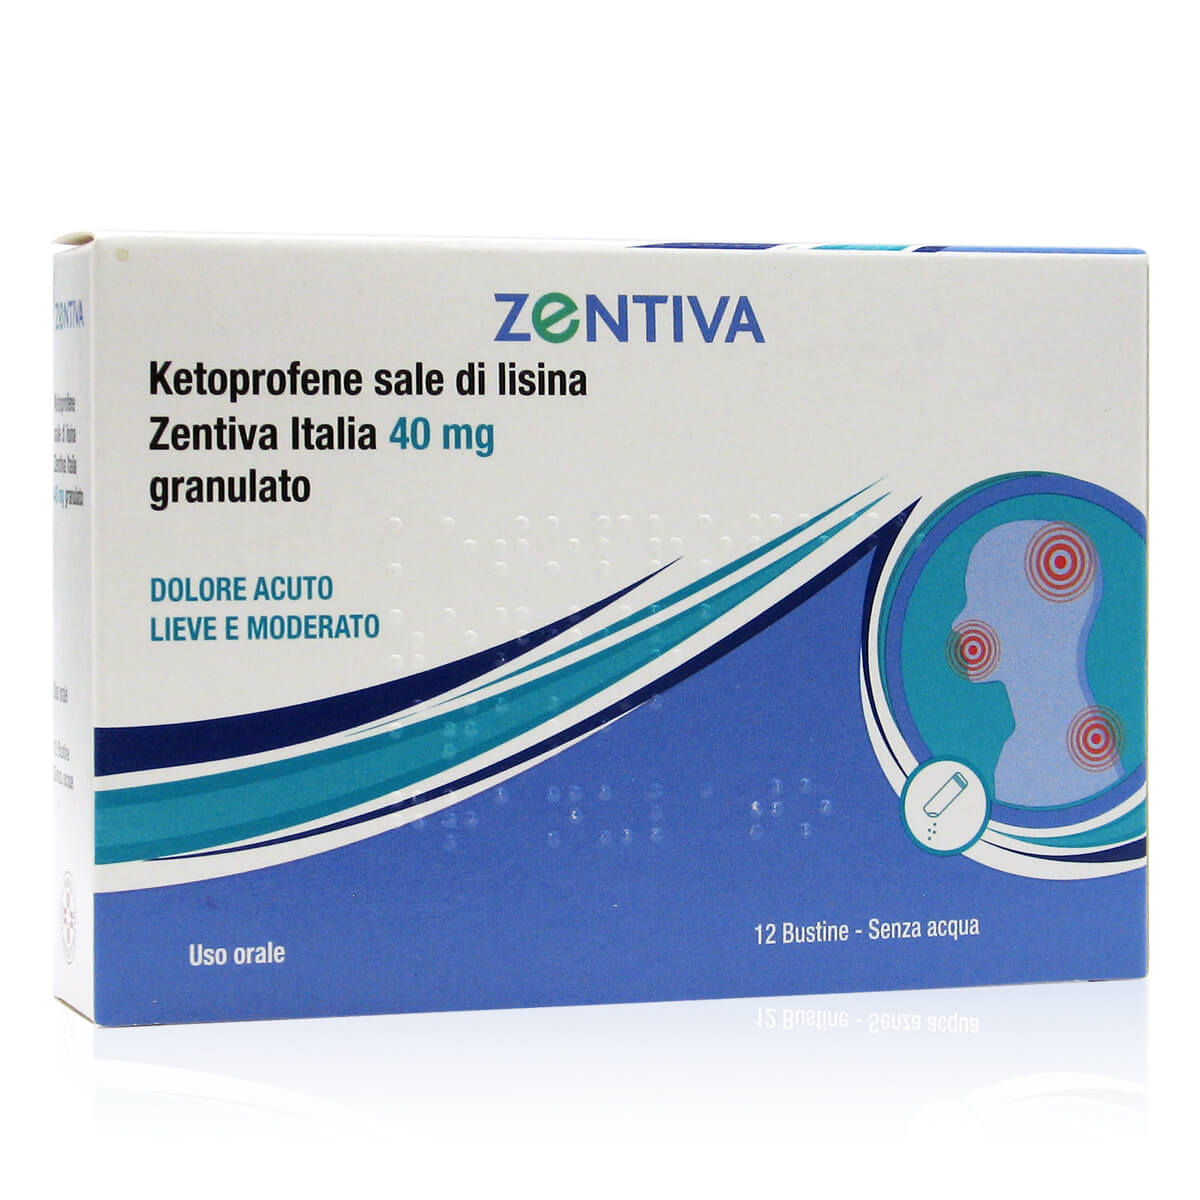 Ketoprofene Sale di Lisina Zentiva Italia 40 mg 12 Bust